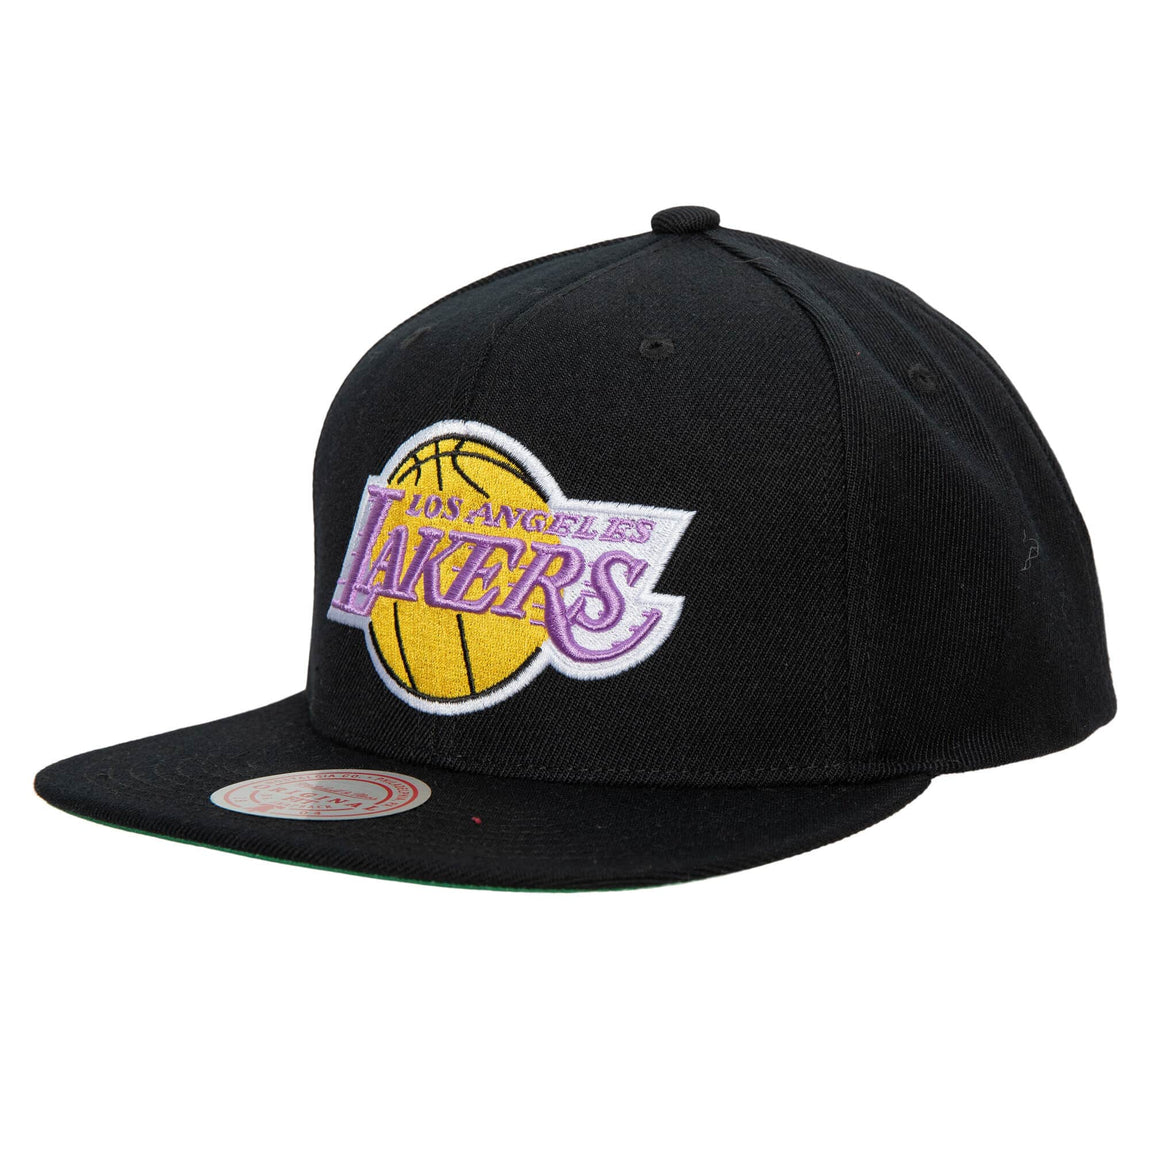 Mitchell & Ness LA Lakers NBA Top Spot Snapback Hat (Black) - Mitchell & Ness LA Lakers NBA Top Spot Snapback Hat (Black) - 